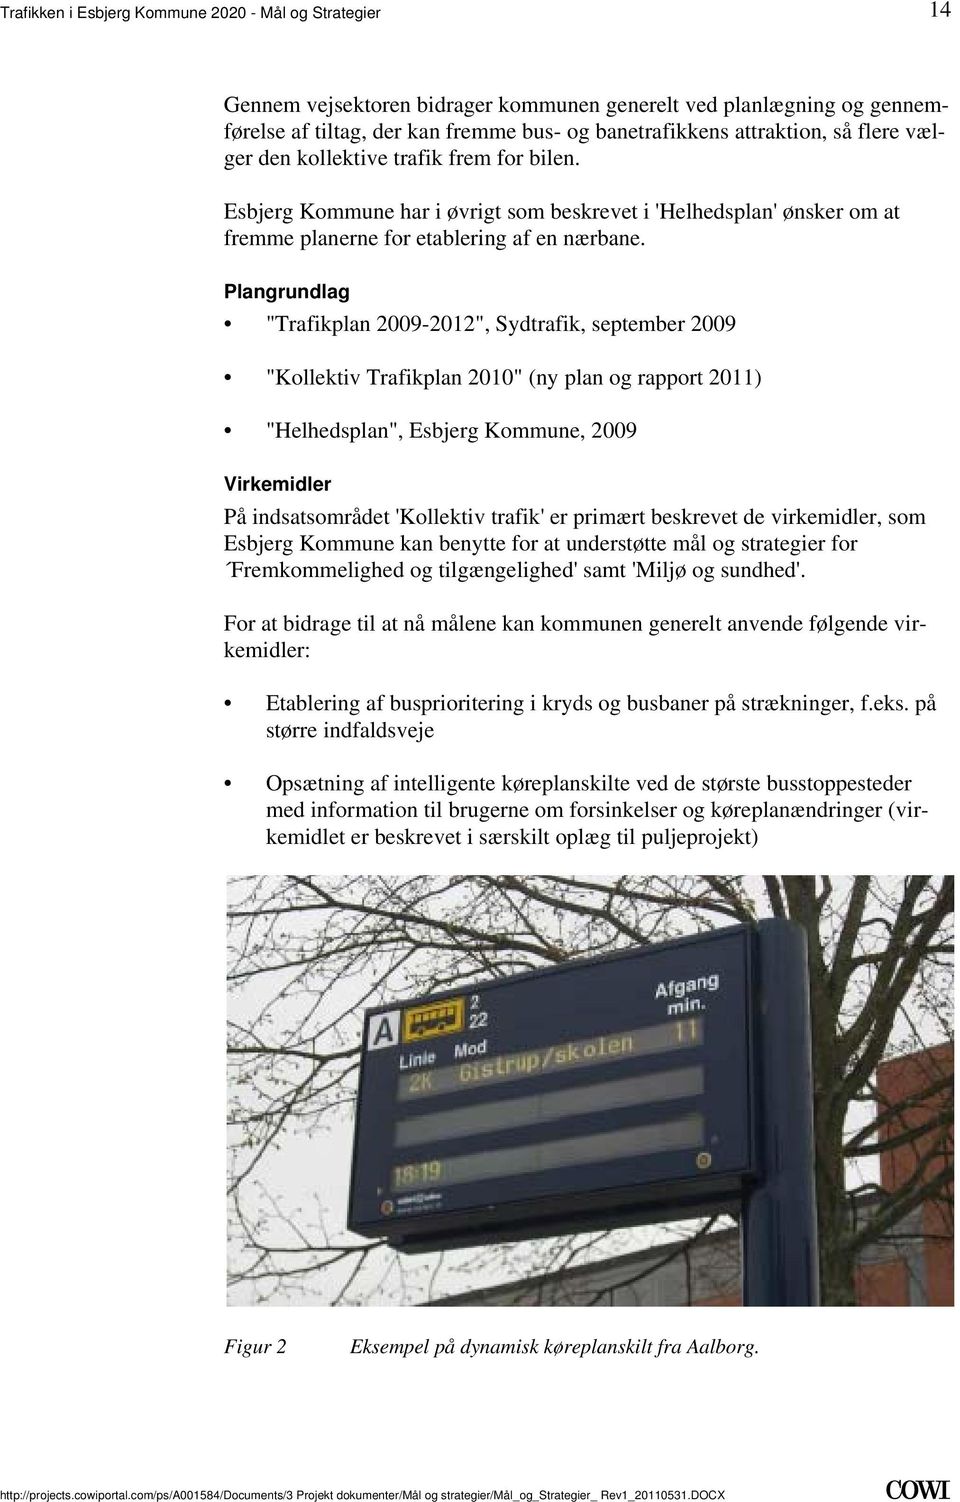 Trafikplan 2010" (ny plan og rapport 2011) "Helhedsplan", Esbjerg Kommune, 2009 Virkemidler På indsatsområdet 'Kollektiv trafik' er primært beskrevet de virkemidler, som Esbjerg Kommune kan benytte